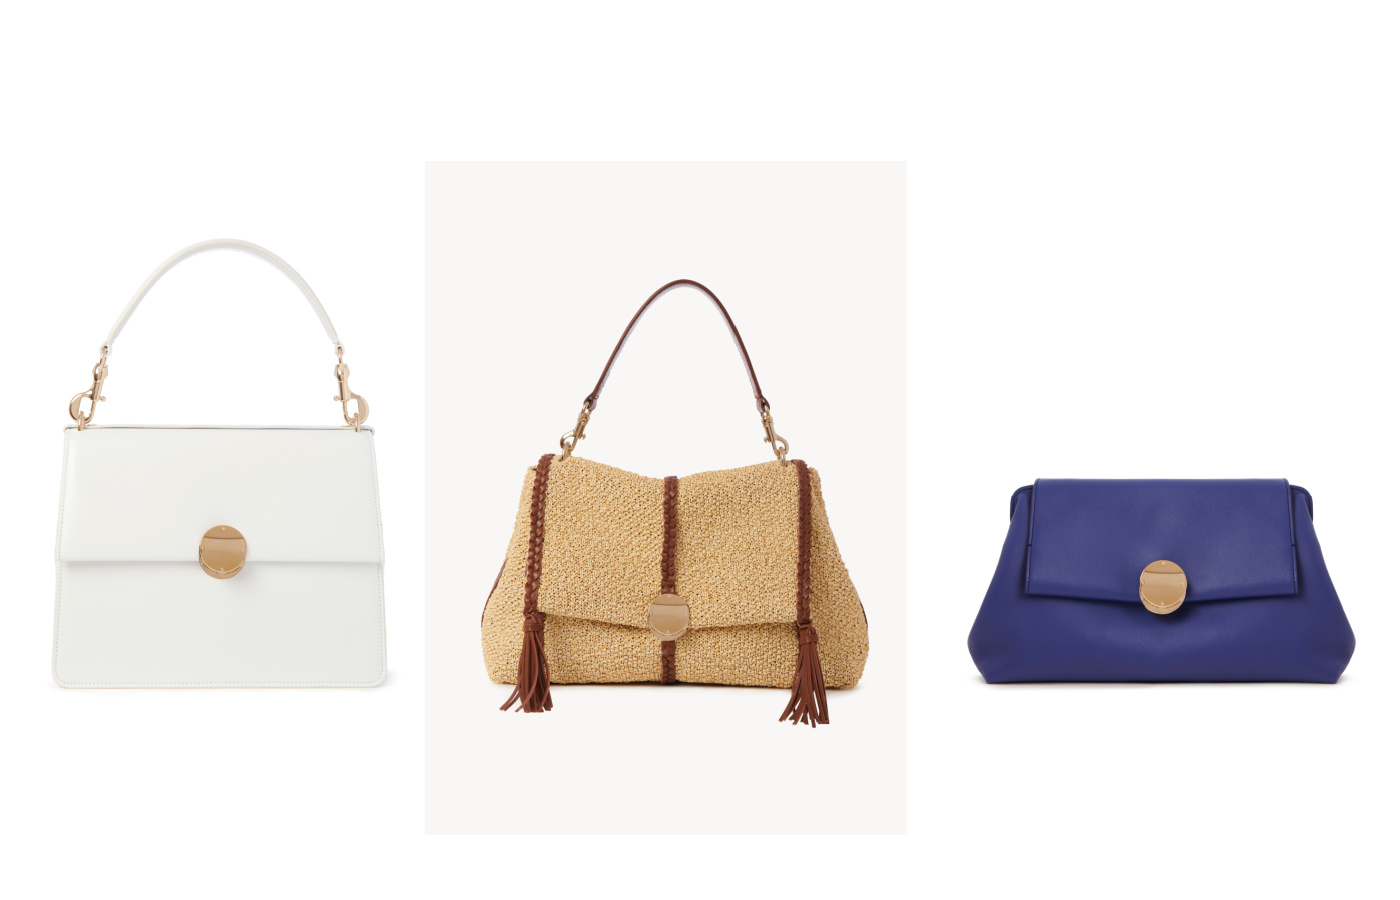 Chloé unveils versatile new ‘it’ bag – the Penelope - The Glass Magazine